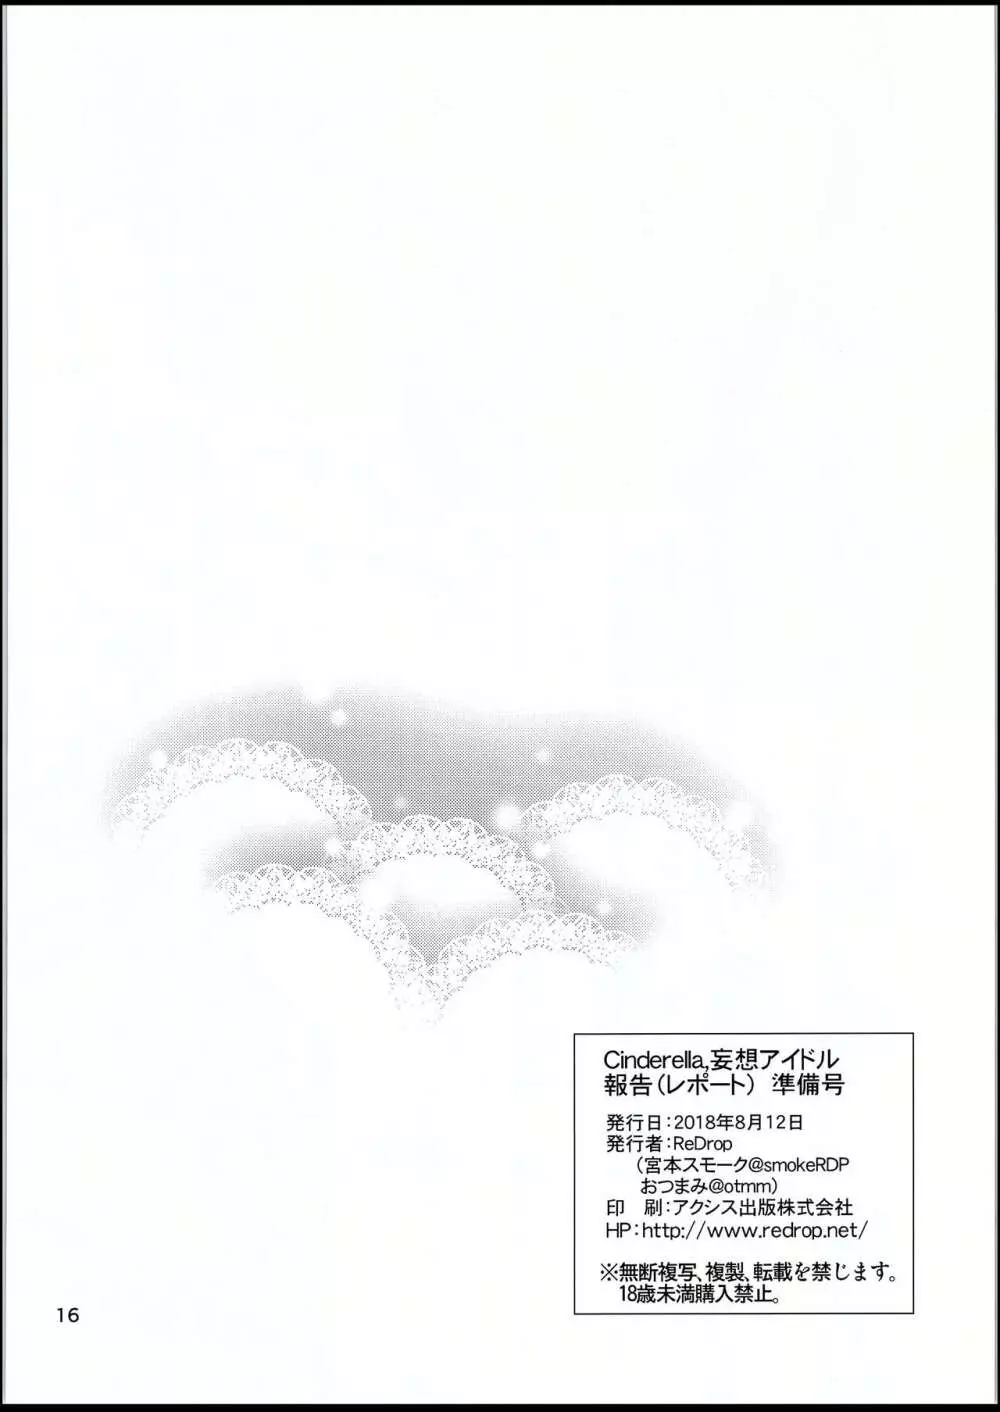 Cinderella, 妄想アイドル報告 準備号 - page15